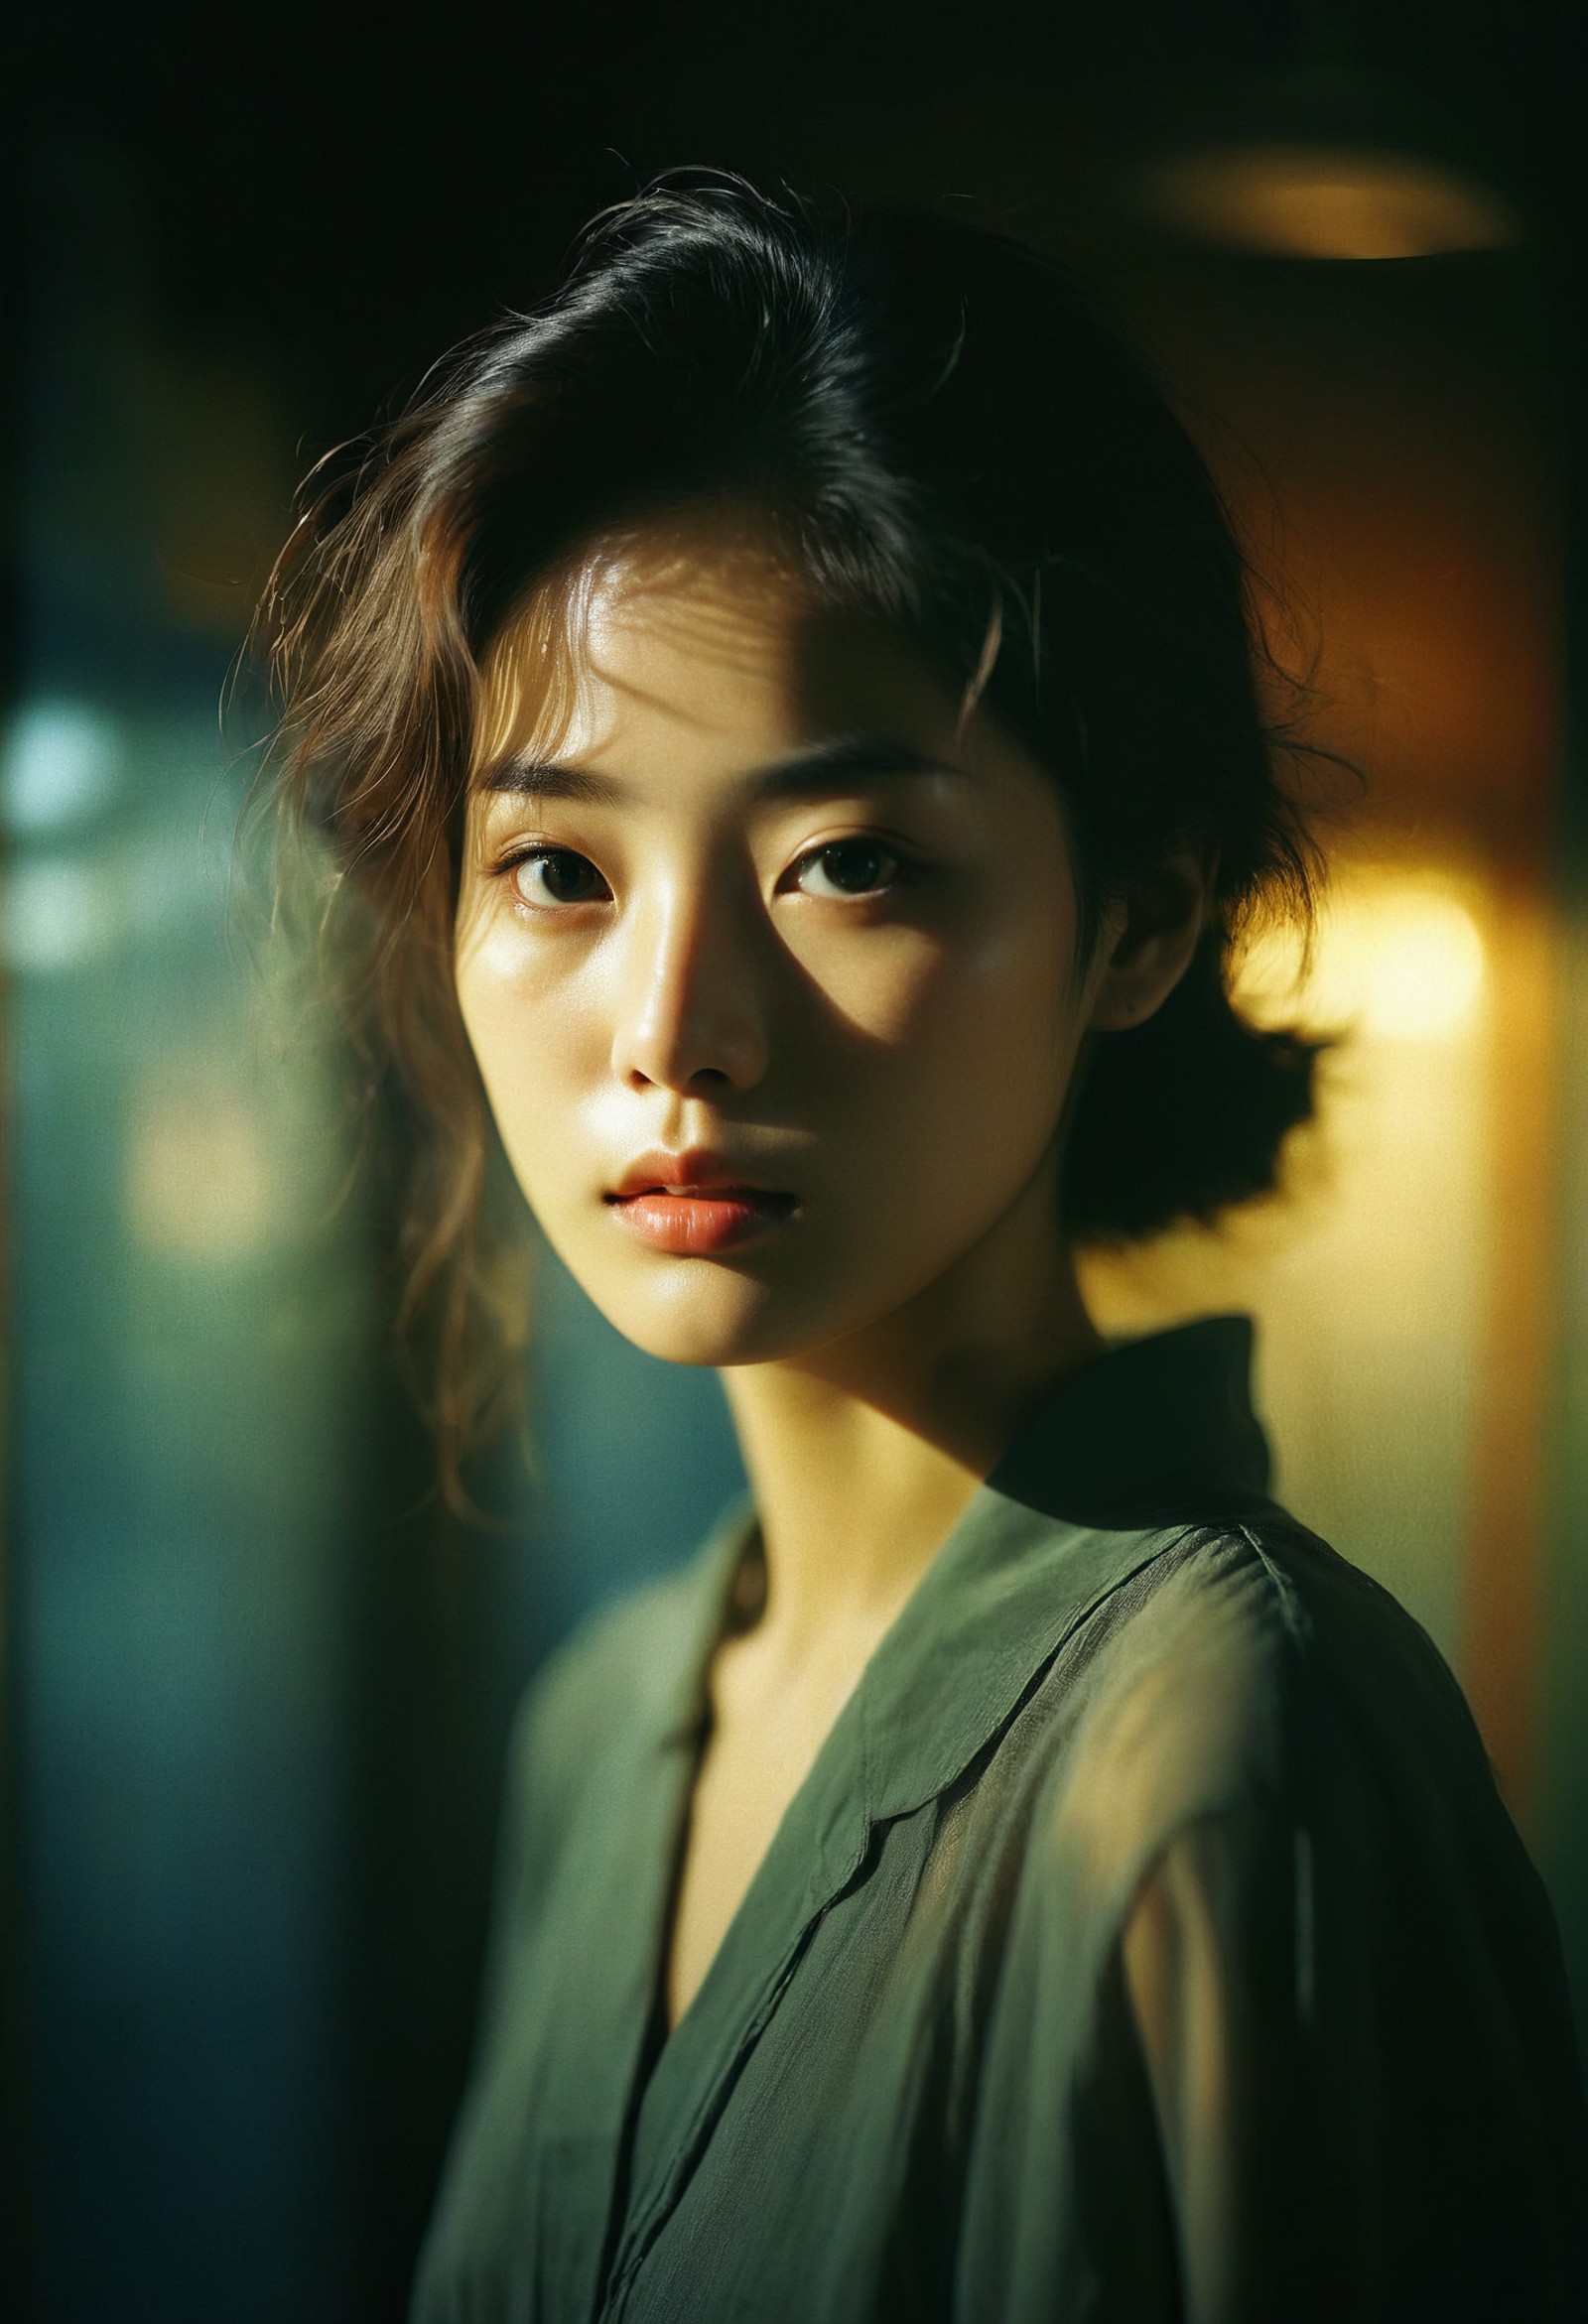 RAW photograph, a mysterious Korean woman, beautiful, flat lighting, cinematic lighting, F/1.8, dark hue, short exposure, ...